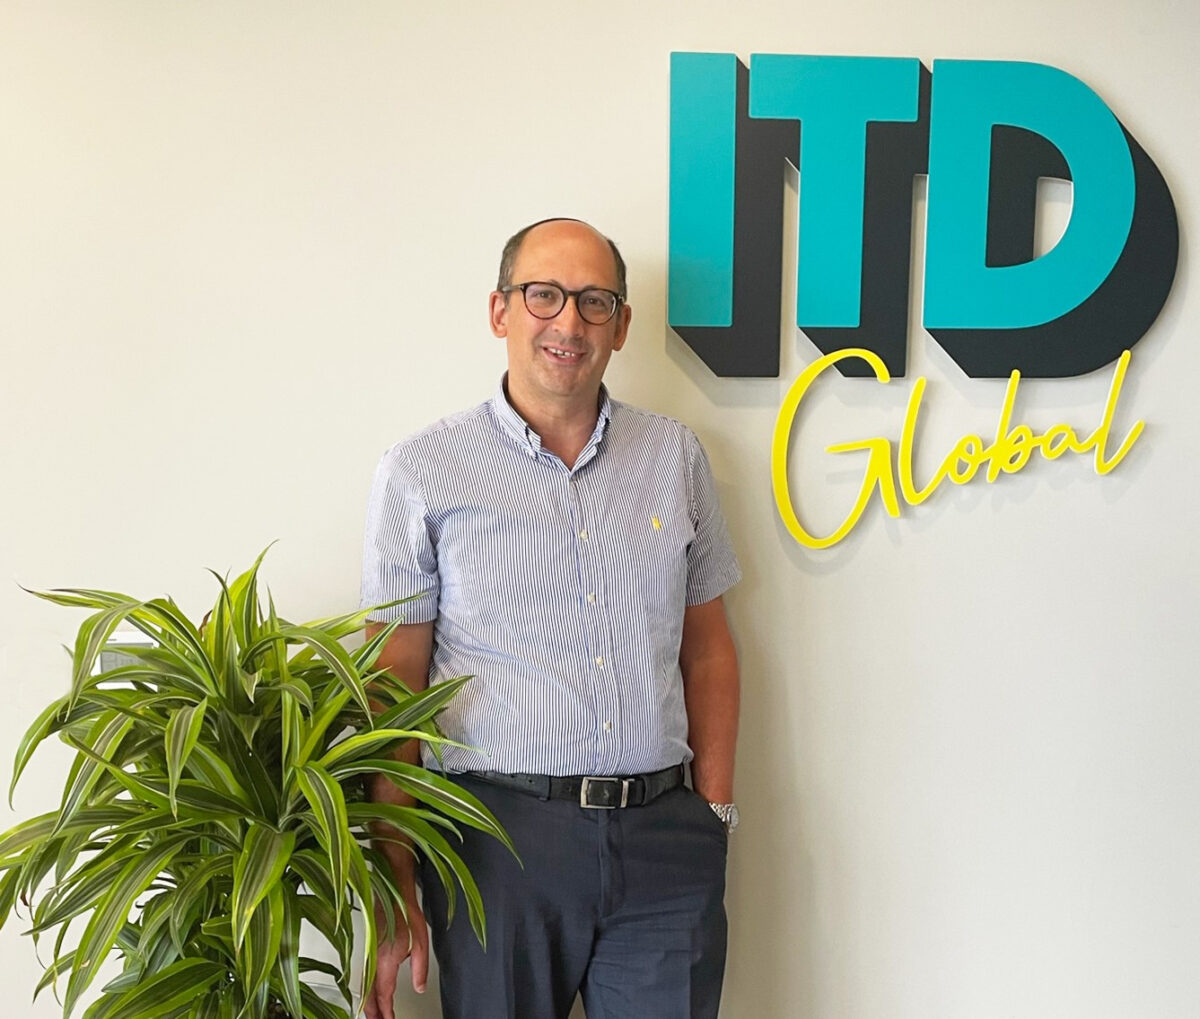 CEO of ITD Global Jonny